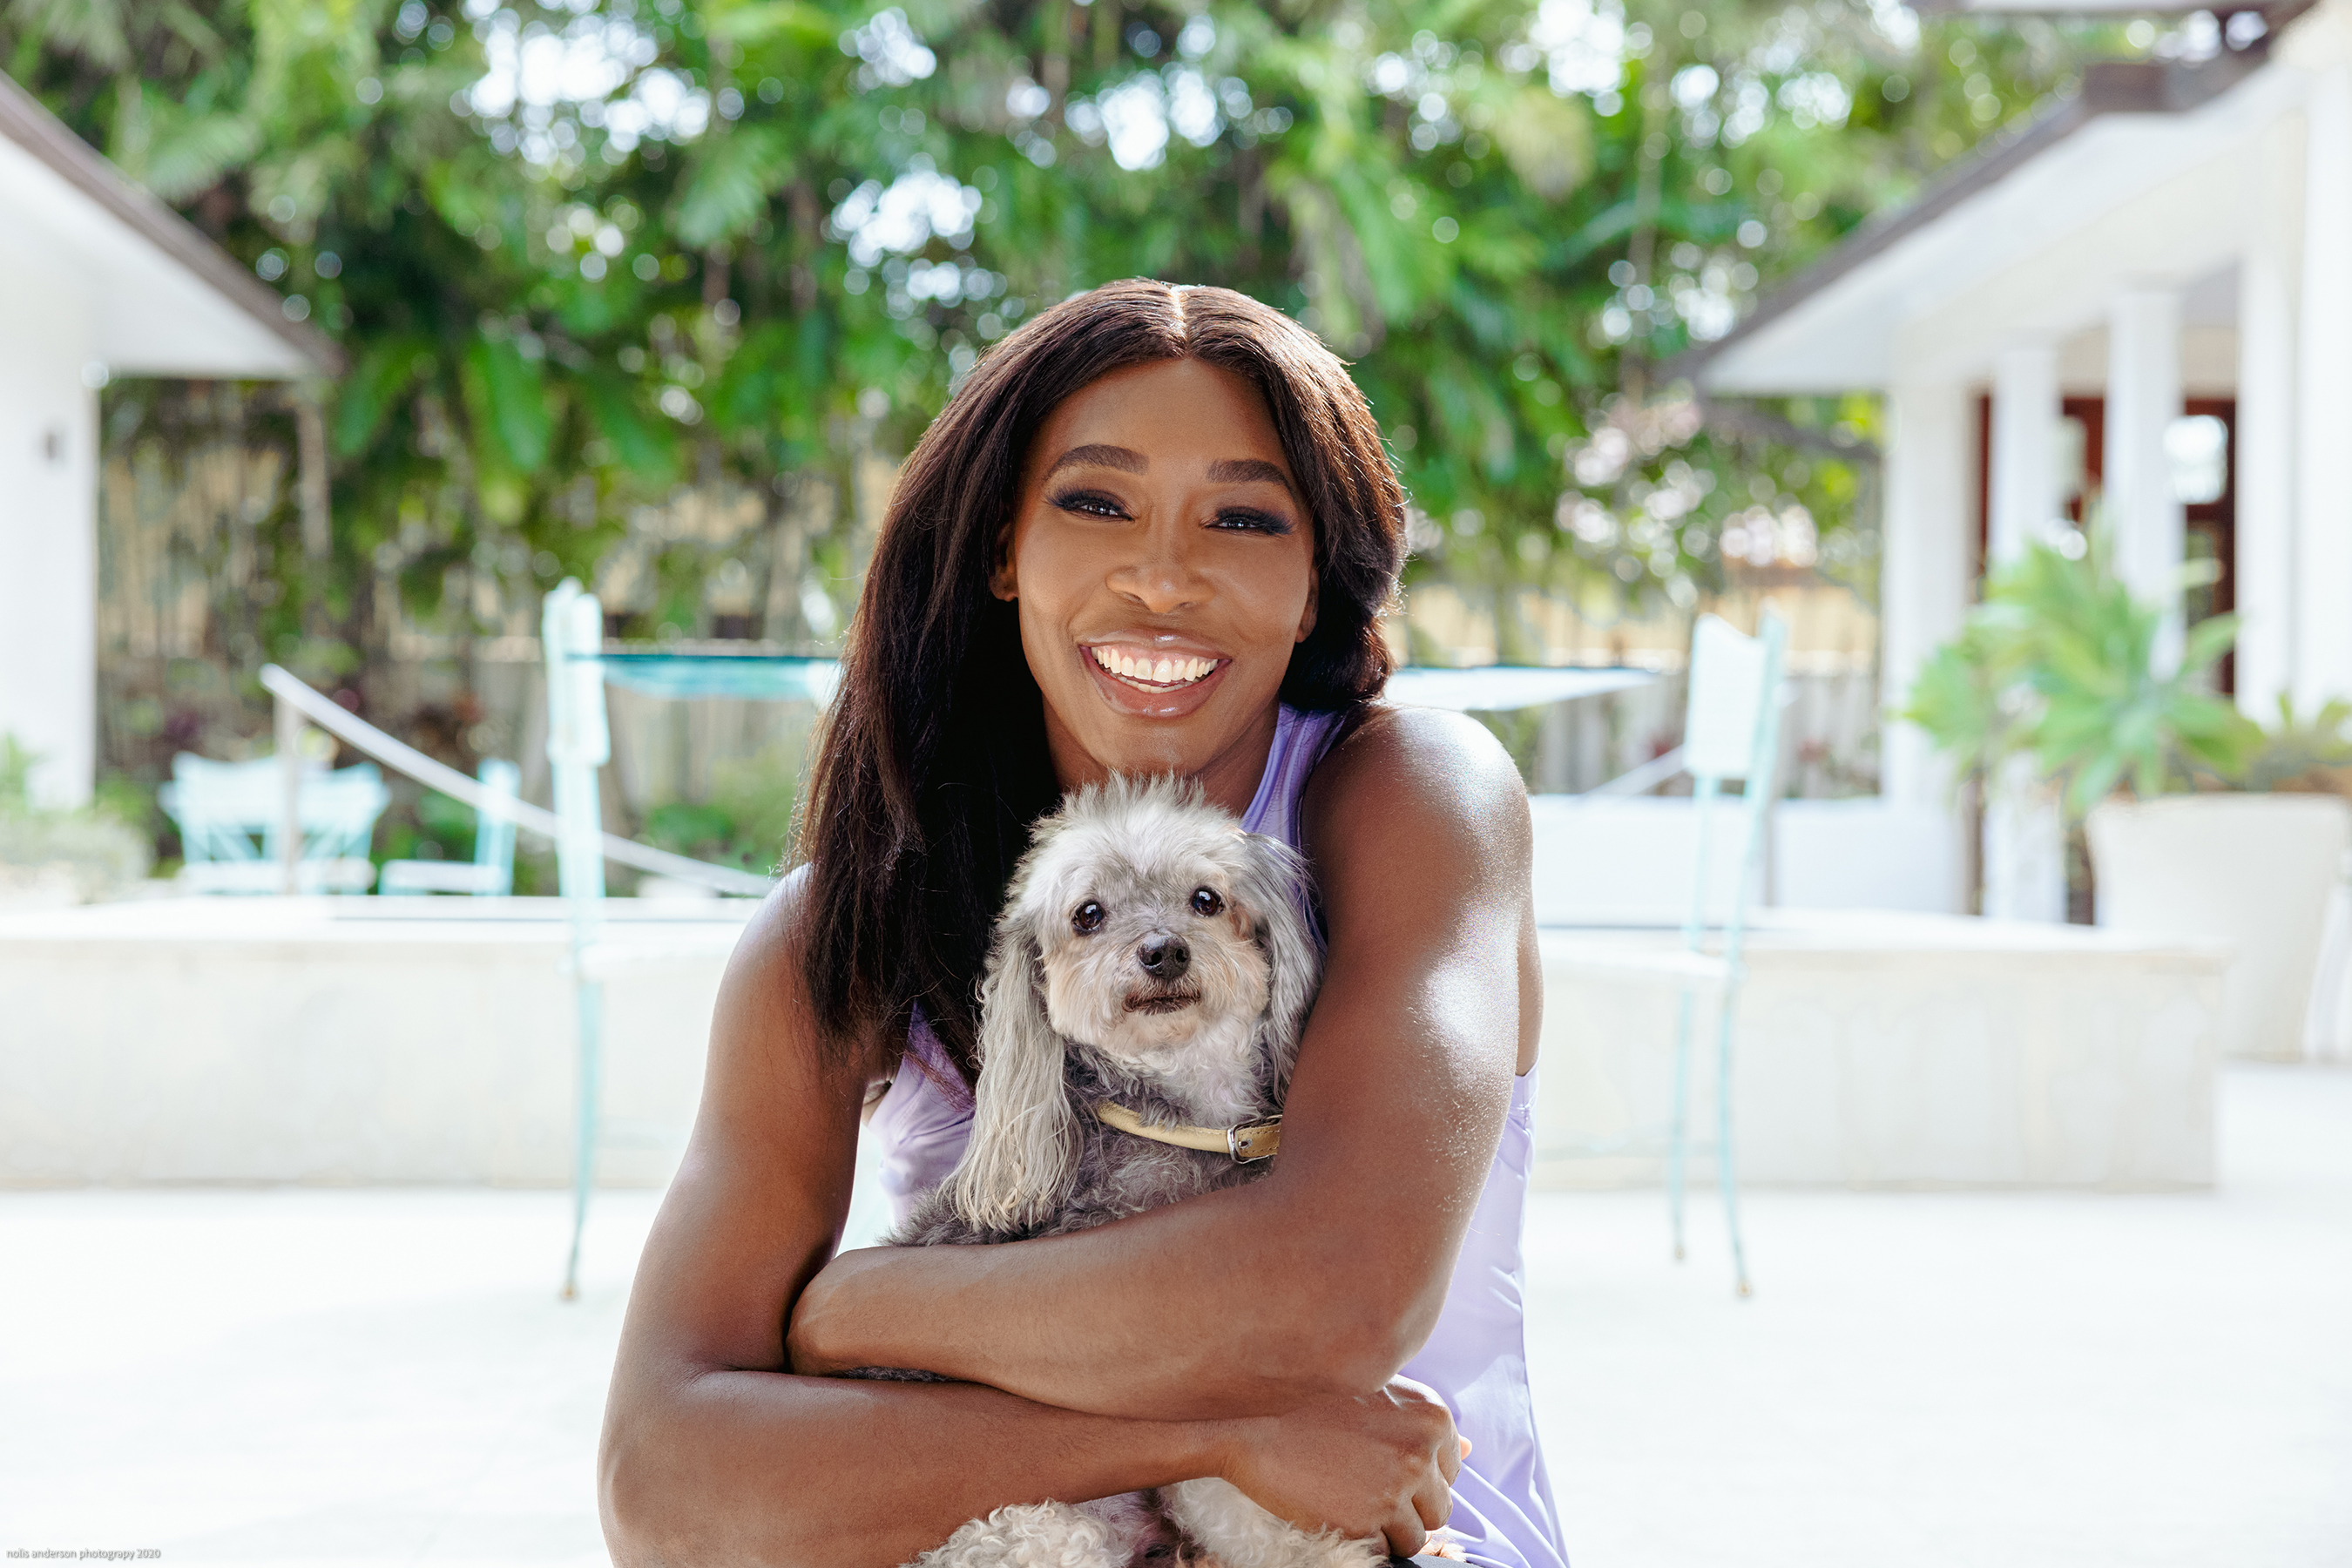 Venus Williams and her dog.